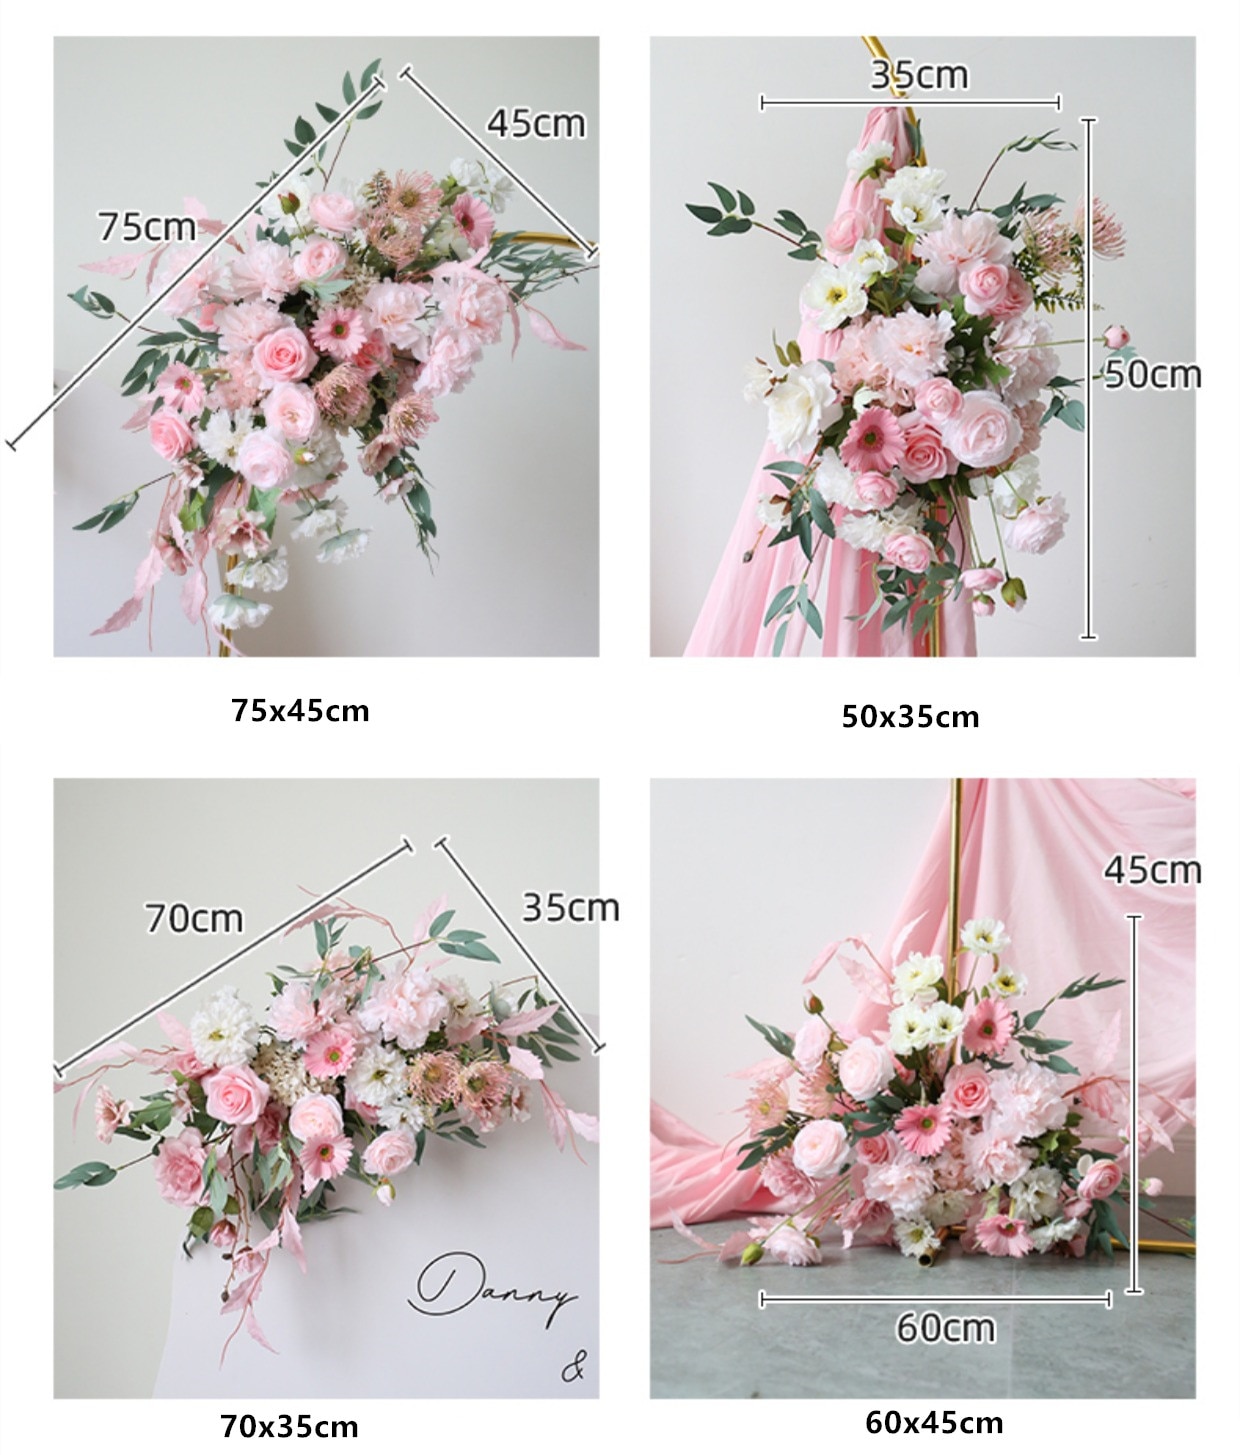 diy flower arrangements for wedding centerpieces1